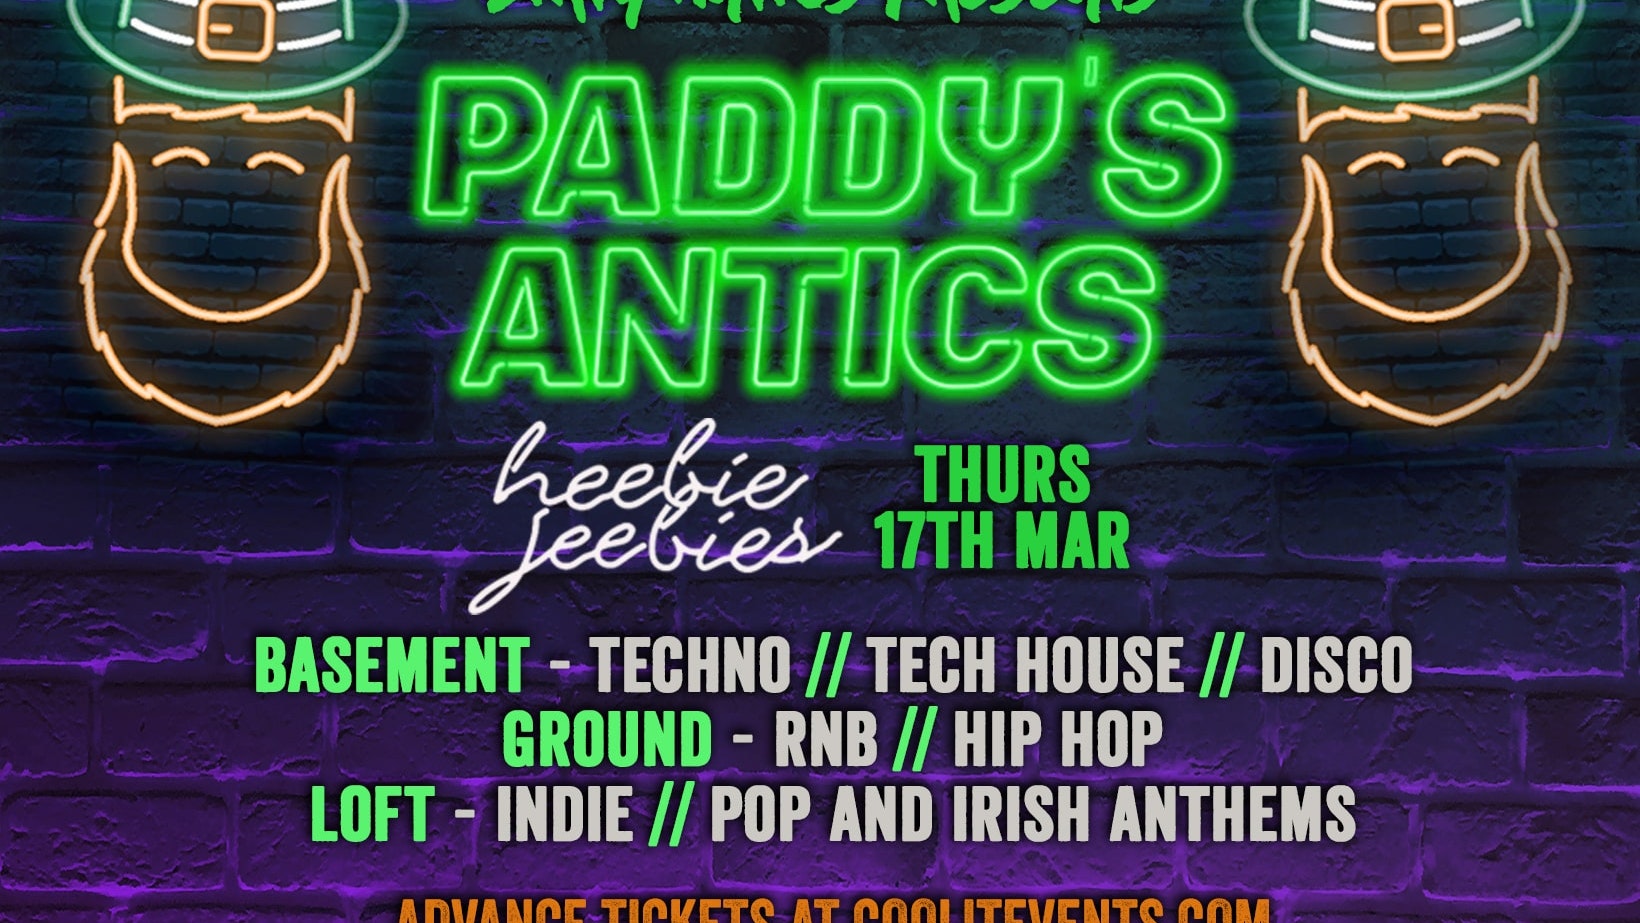 Dirty Antics Thursdays : Paddy’s Antics